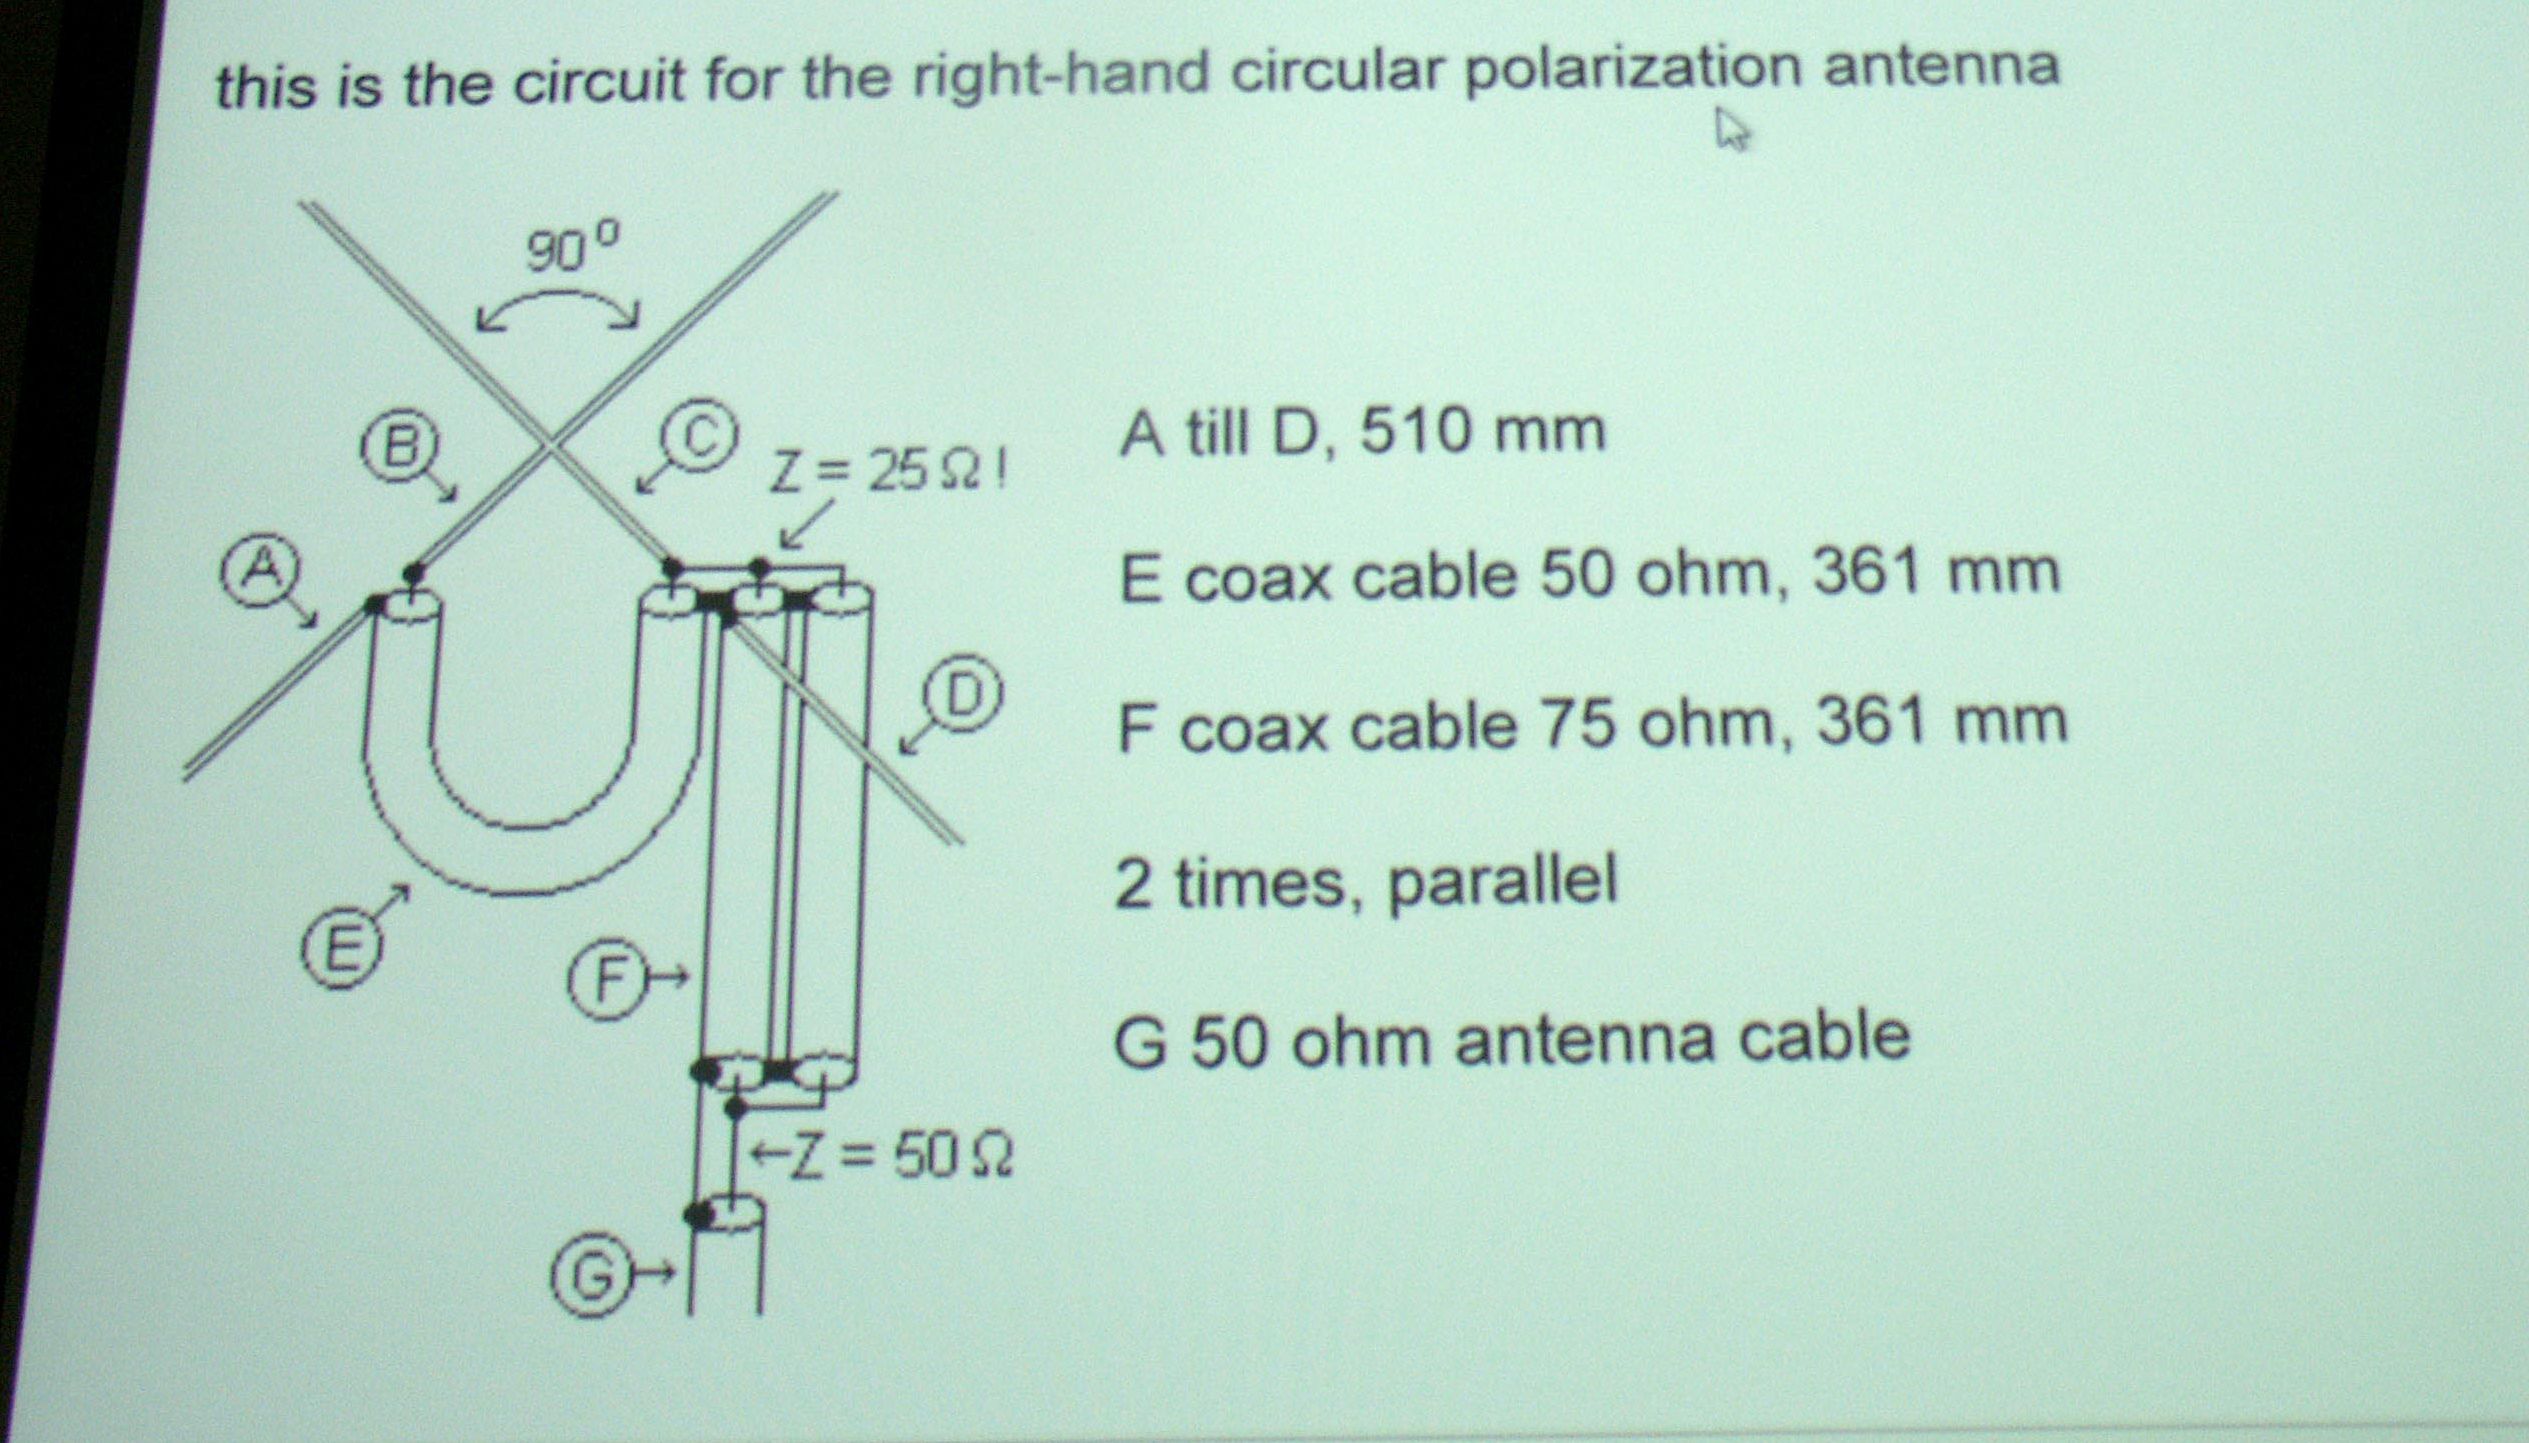 Six-meter circularly polarized
antenna